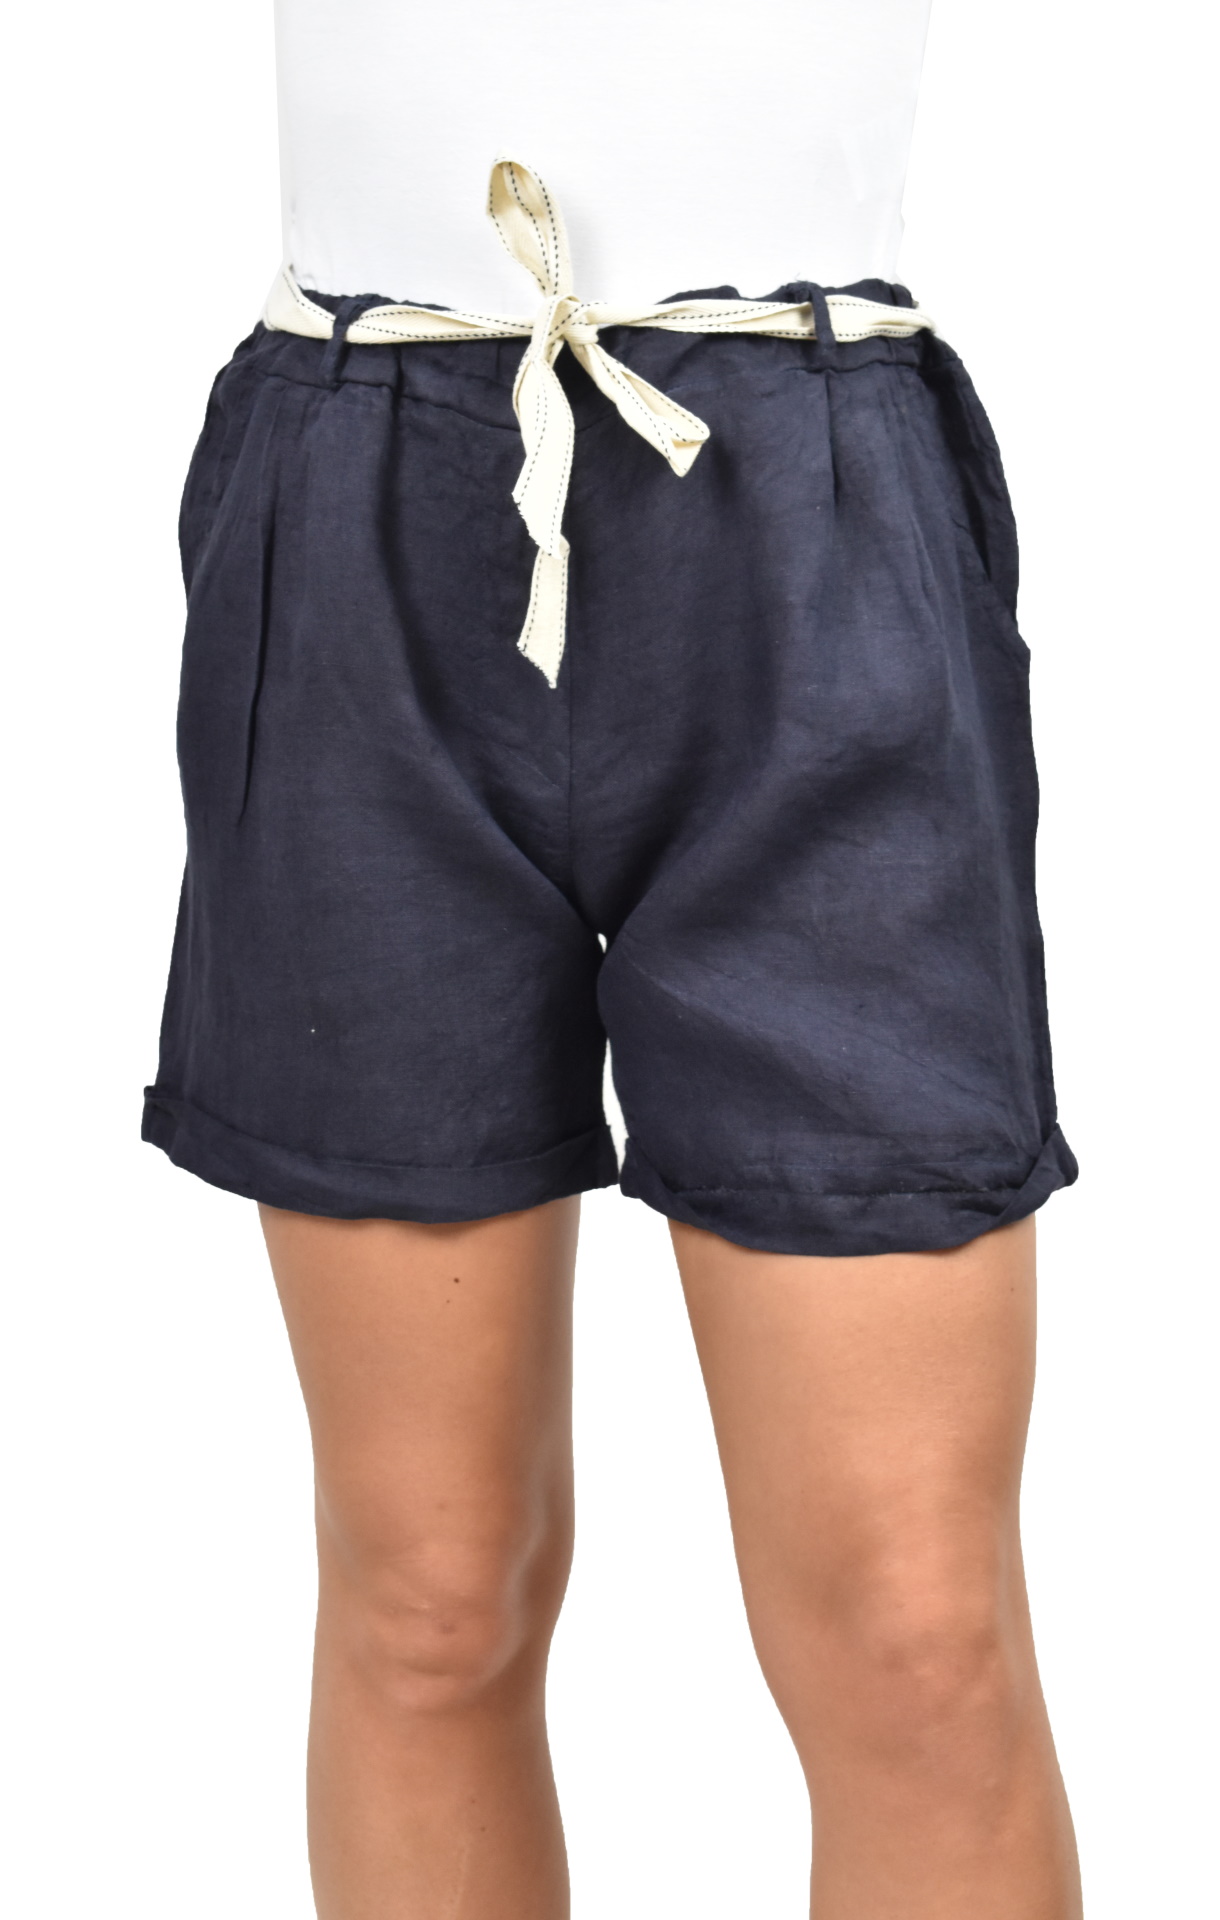 PANMAXPE2101 BLU PANTALONCINO DA DONNA 100 LINO 3 1stAmerican pantaloncino da donna 100% lino Made in Italy - bermuda mare